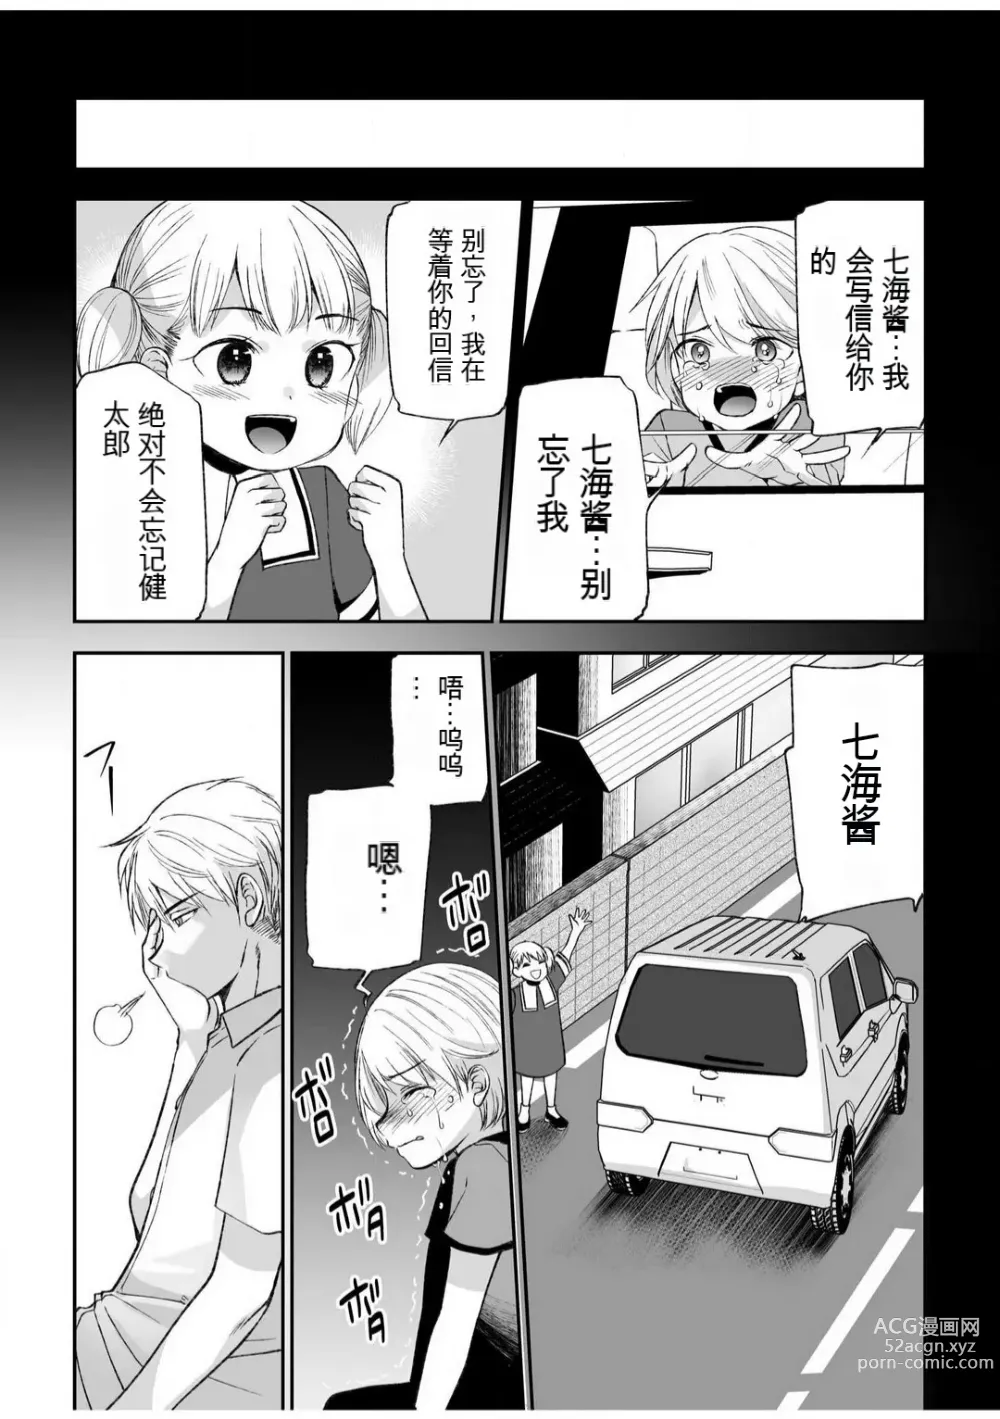 Page 24 of manga 「不要...不要进来太多...」〜冷酷攻略系的青梅竹马和义兄妹〜SEX〜【18禁】 1-10【GPT翻译】